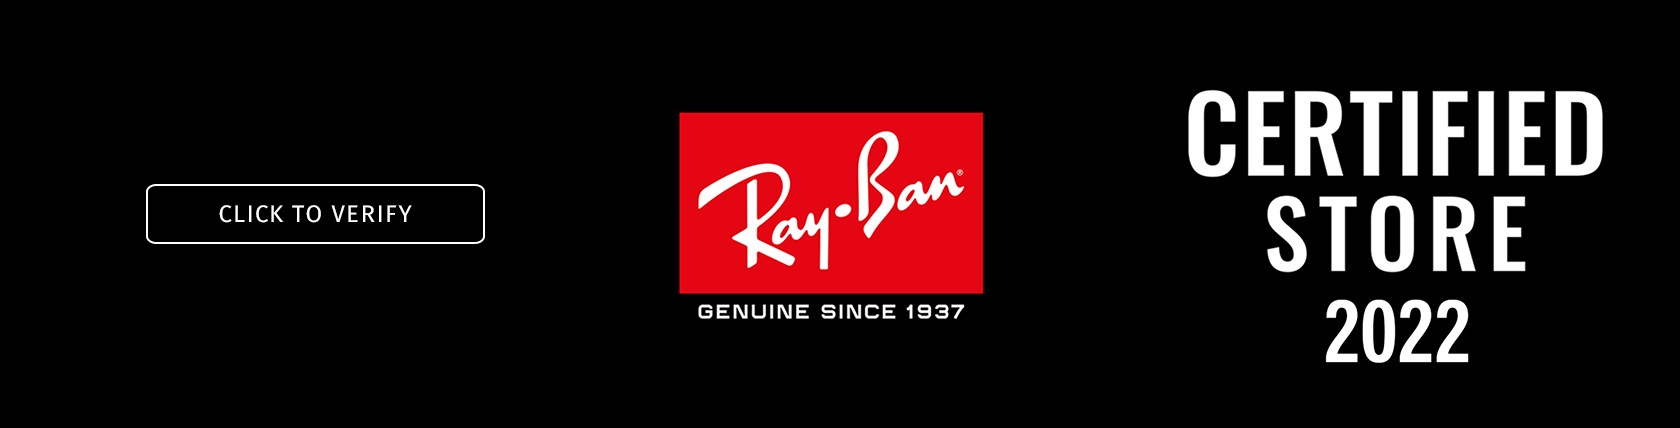 Videt este Certified Reseller Ray-Ban! Cei mai doriți ochelari Ray-Ban, la
									super prețuri!